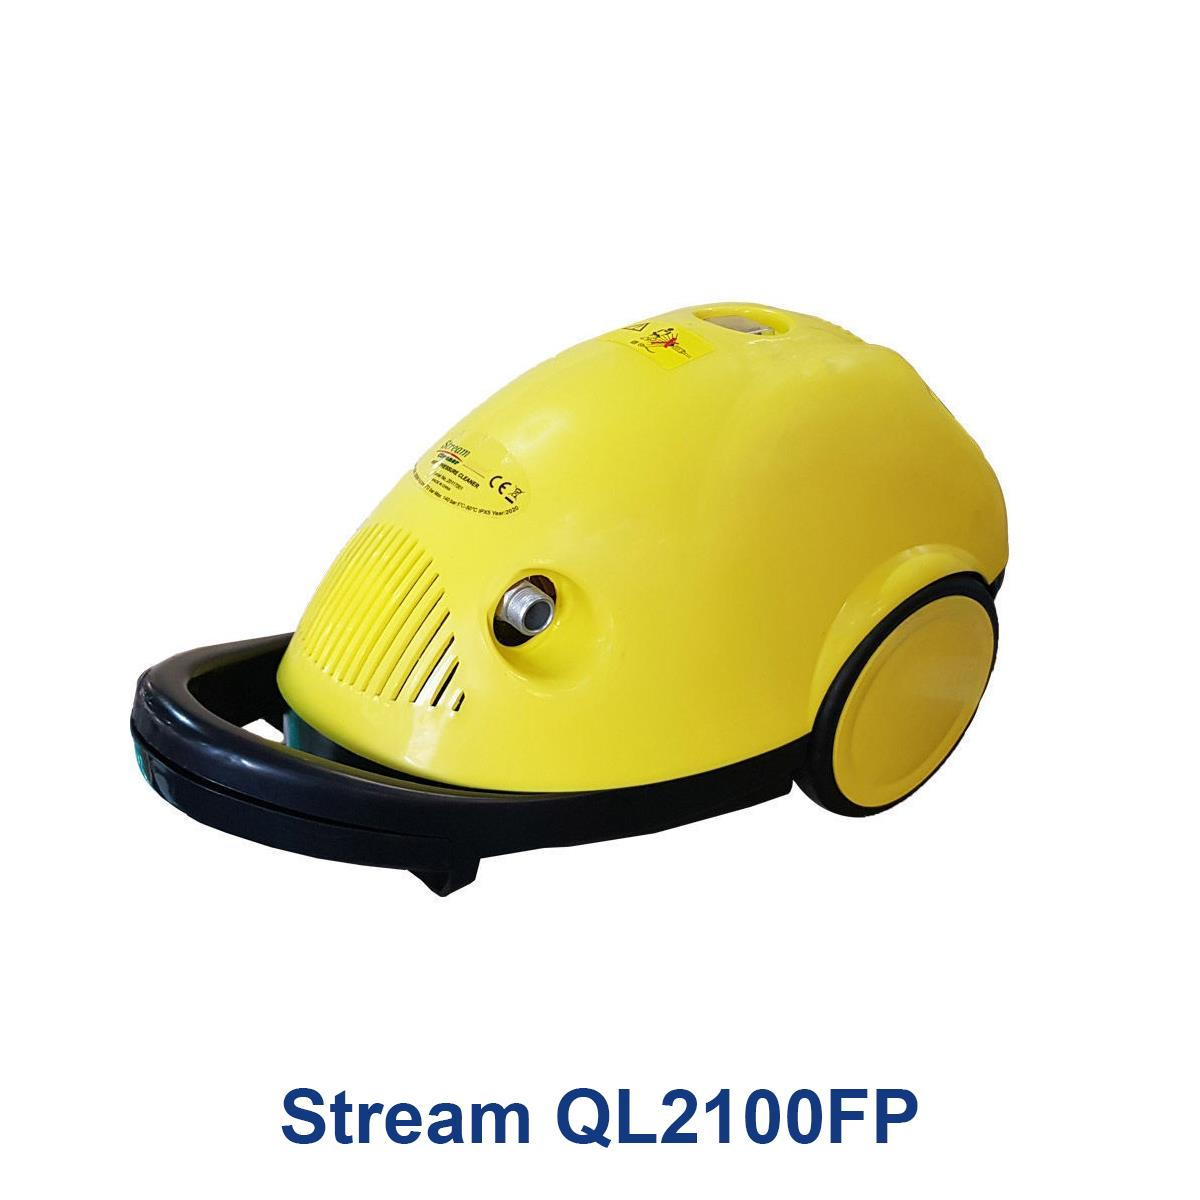 Stream-QL2100FP